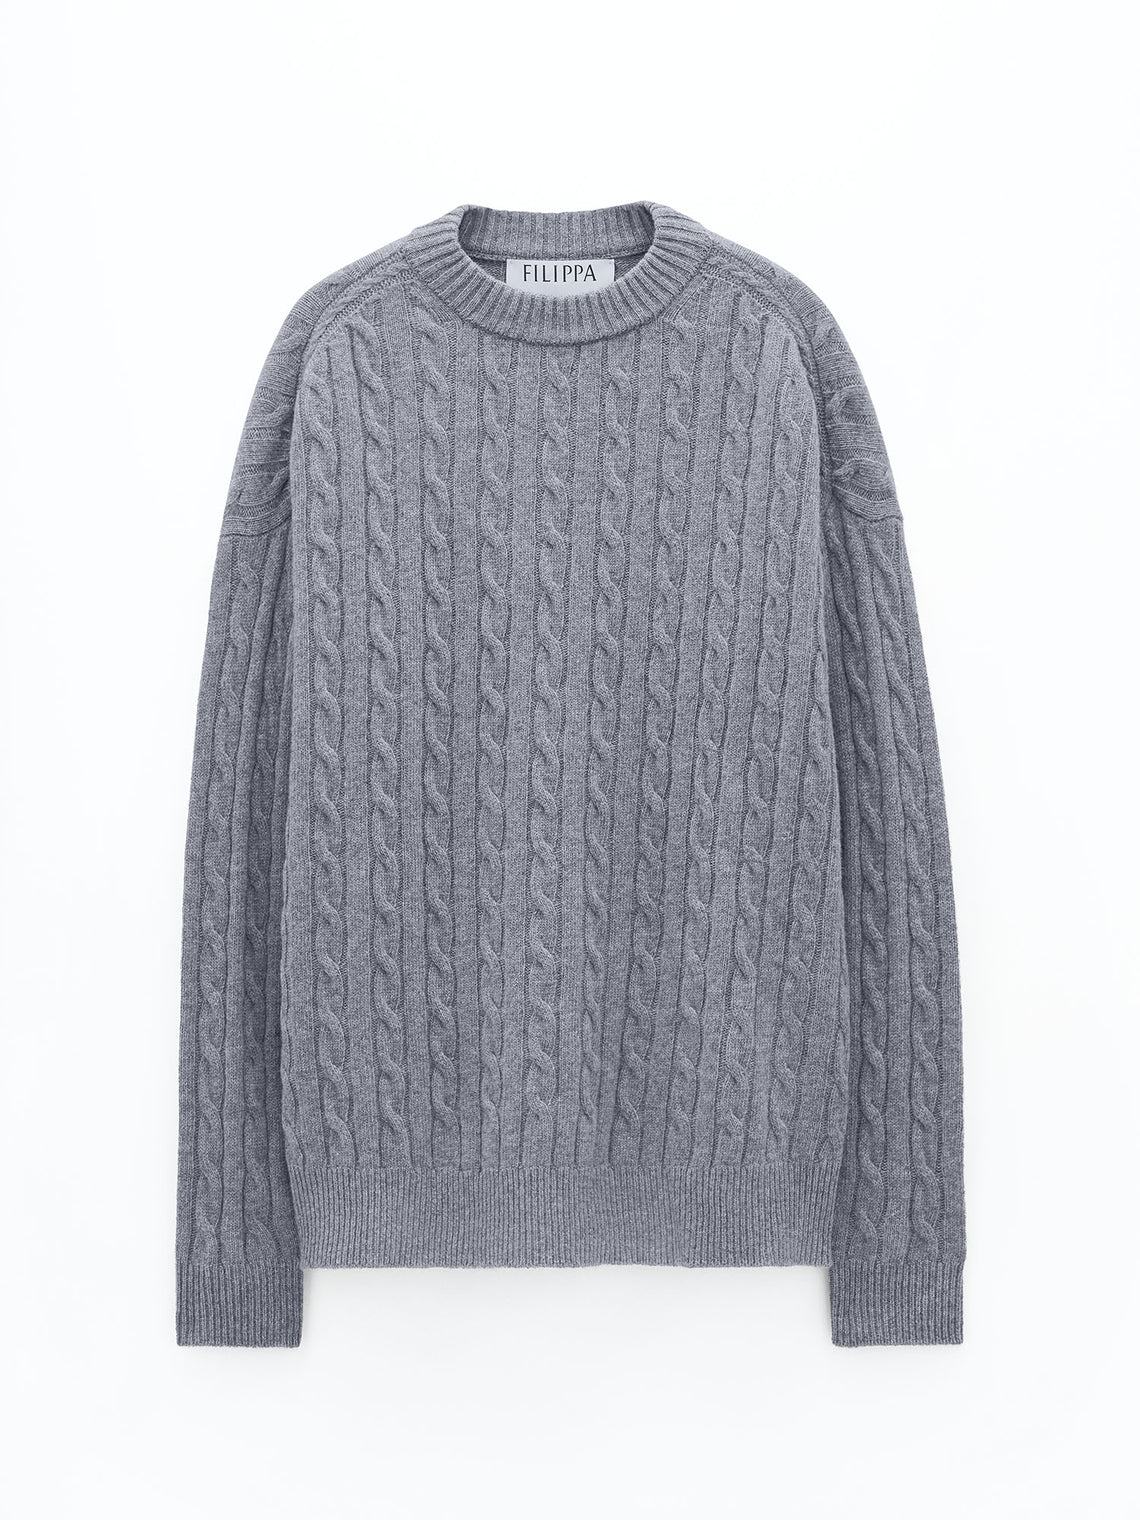 Braided sweater by Filippa K - mid grey